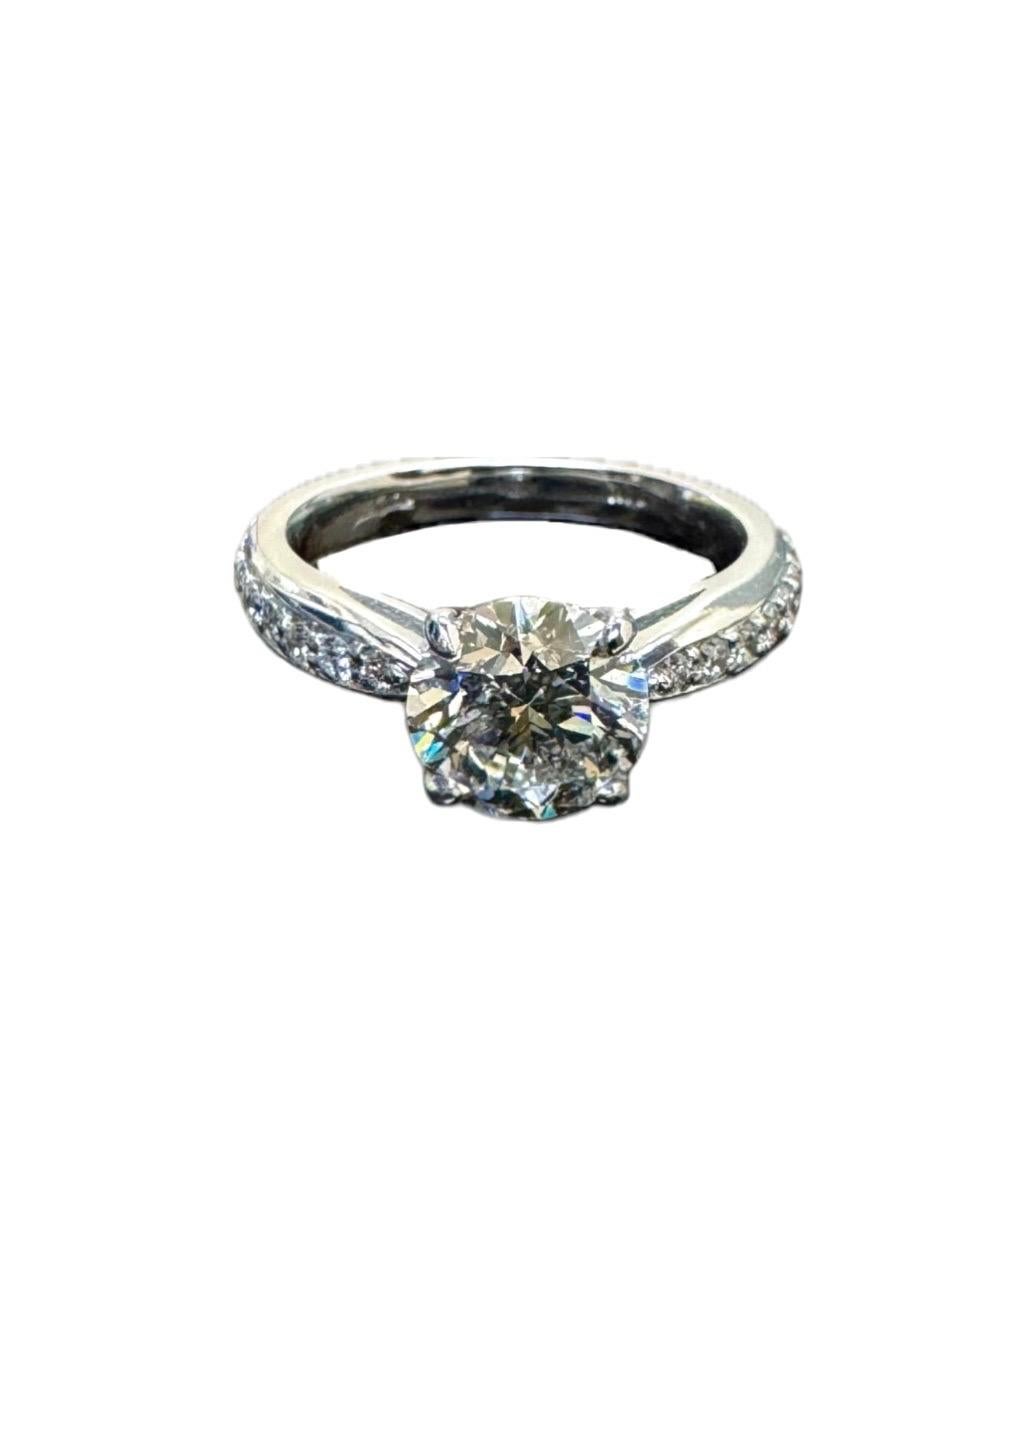 DeKara Design Collection

Modern 14K White Gold Diamond Engagement Ring.

Metal- 14K White Gold, .583.

Stones- GIA Certified I Color I1 Clarity 1.70 Carat Diamond, 16 Round Diamonds G-H Color VS2 Clarity 0.40 Carats.

Ring Comes With GIA